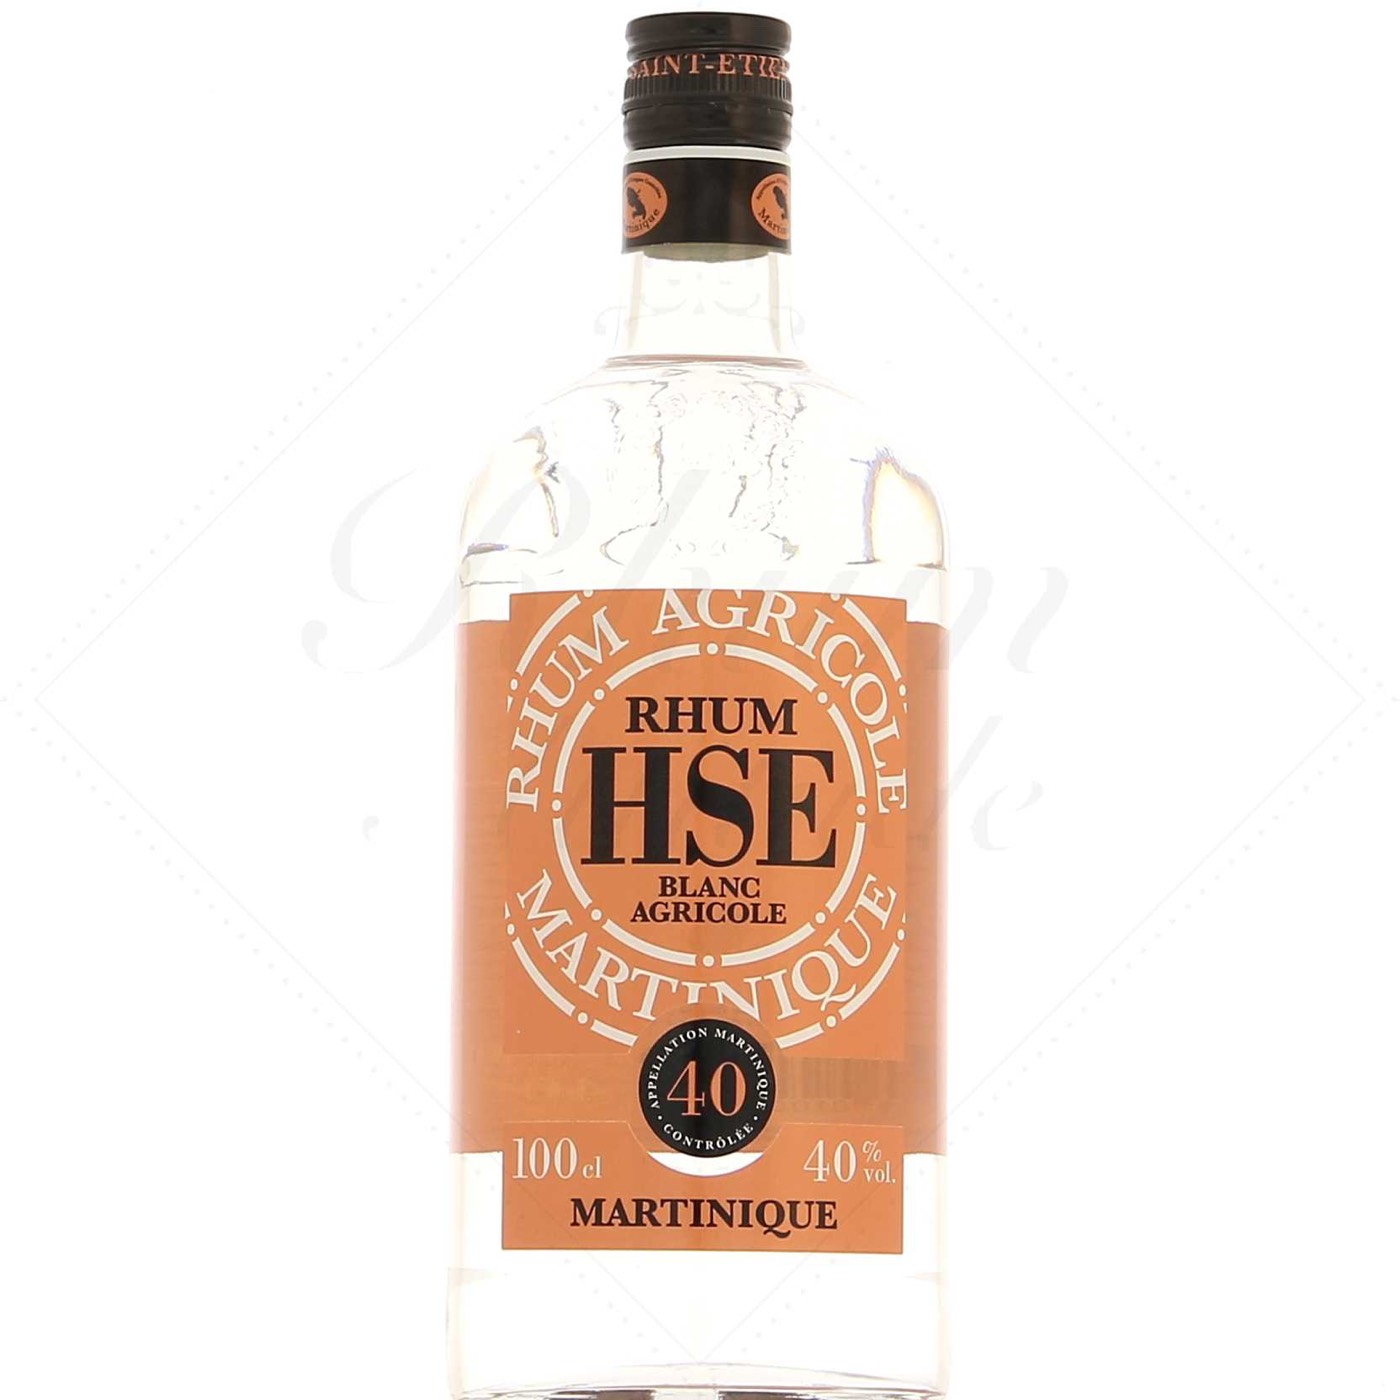 Bottle image of HSE Blanc